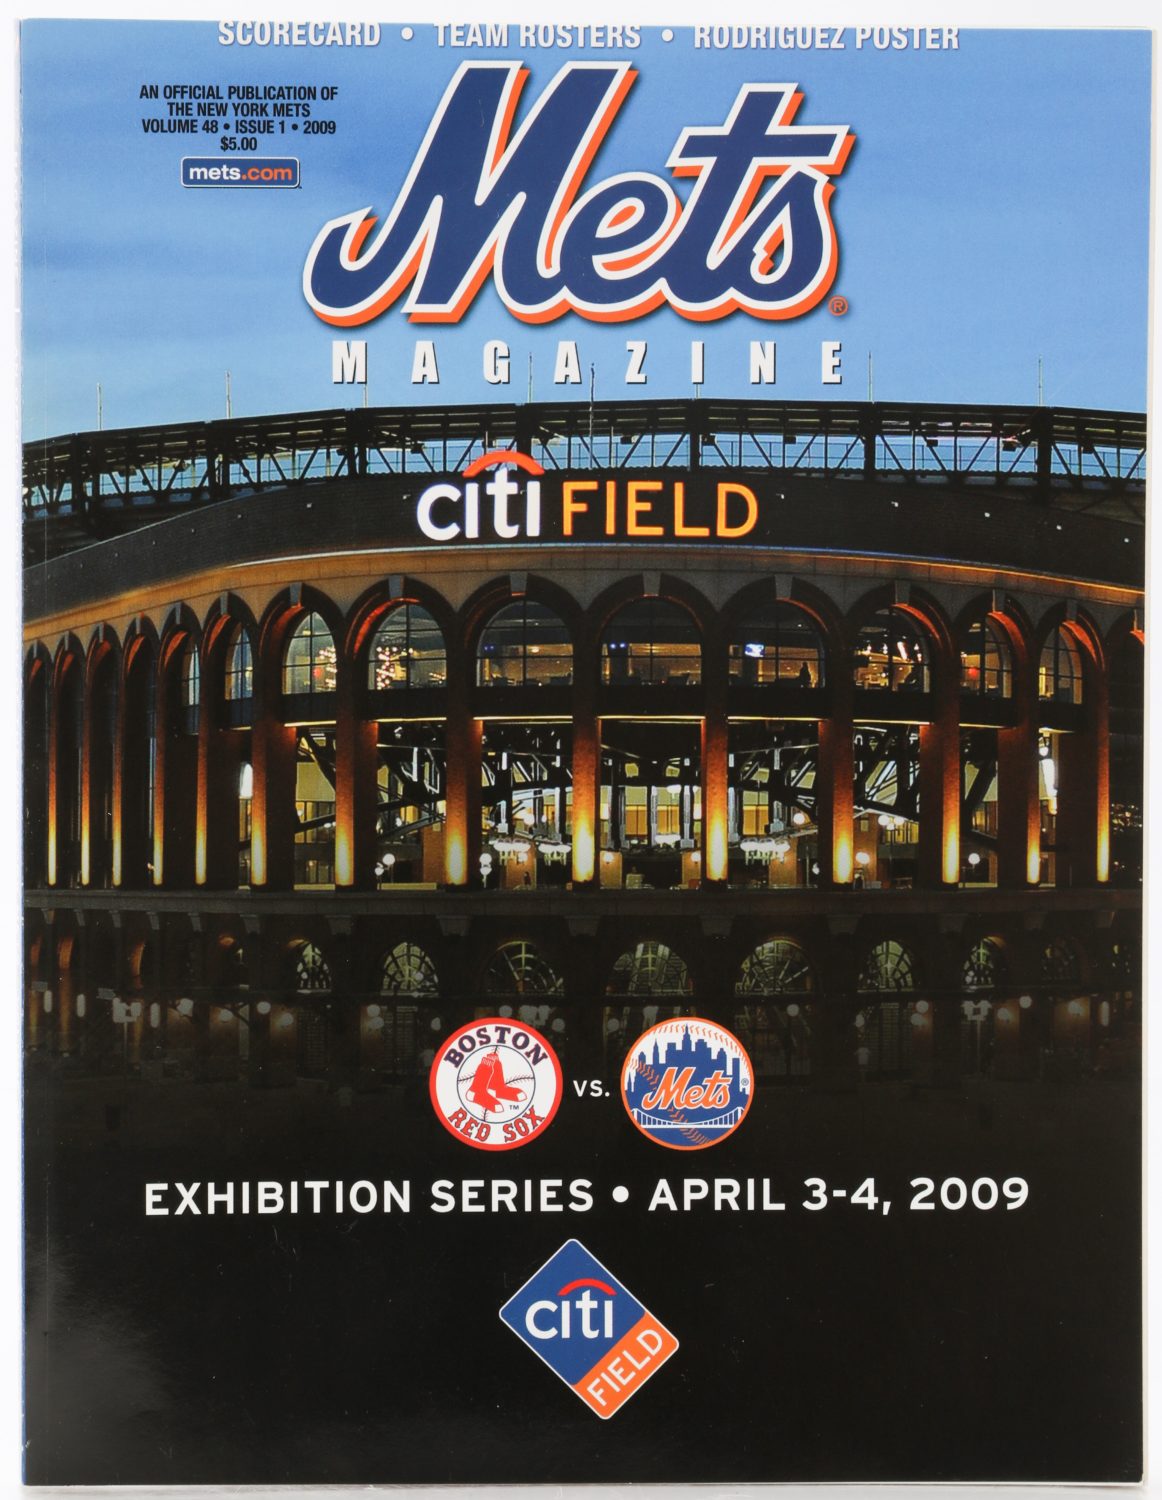 Mets Magazine: Inaugural Series at Citi Field